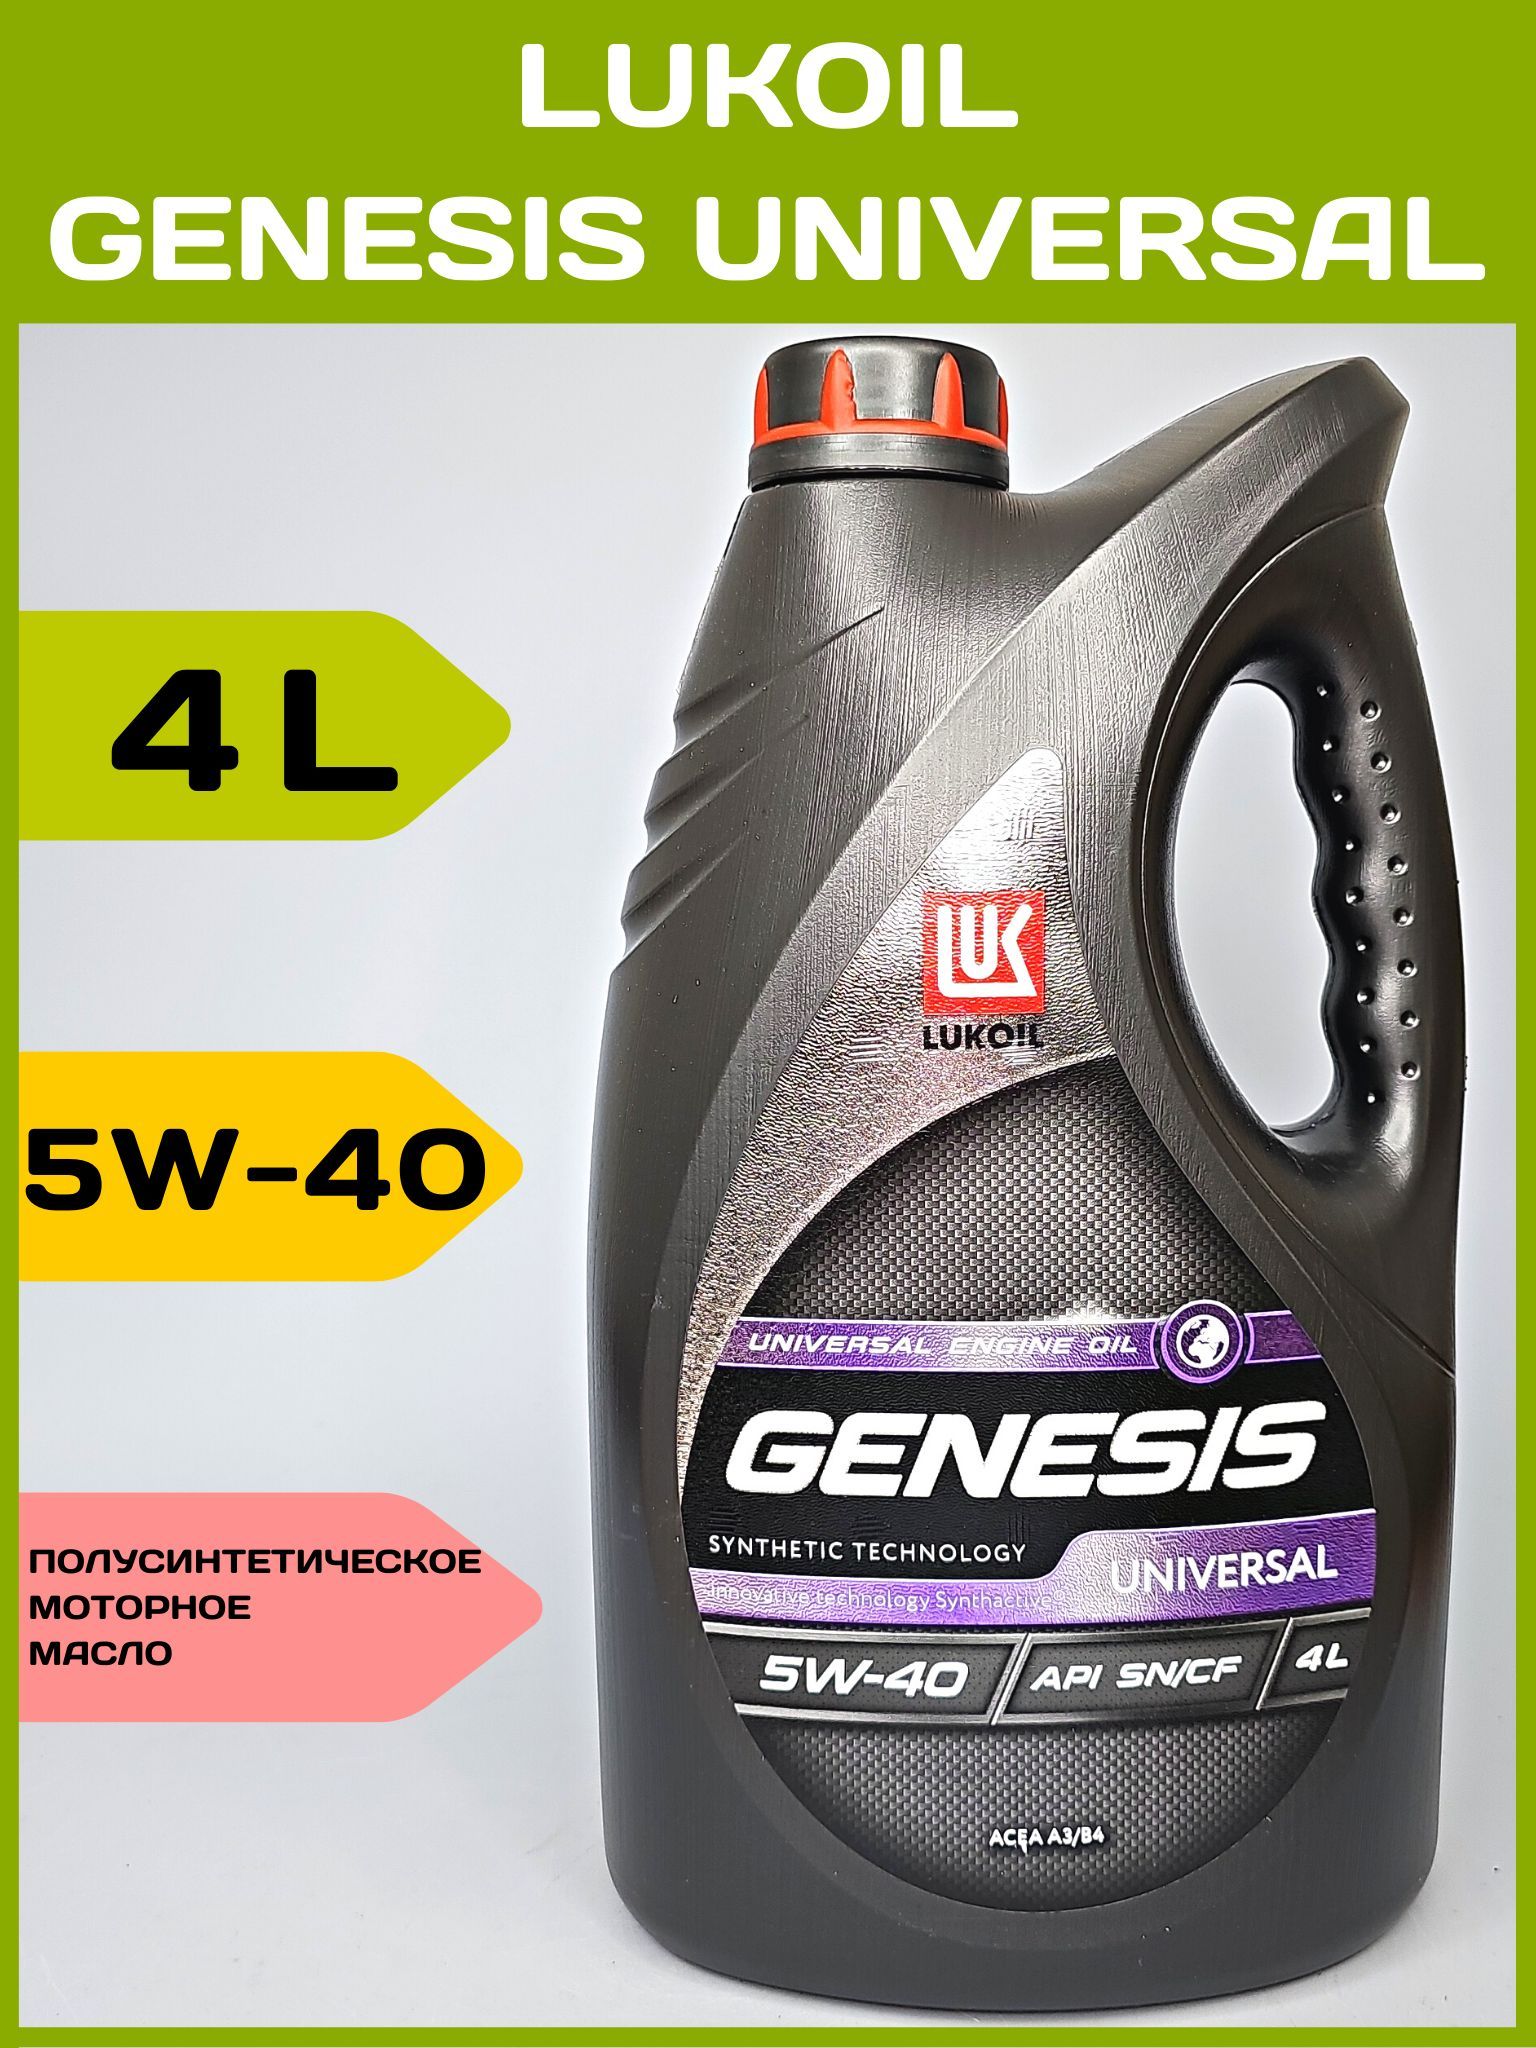 Масло лукойл 5 40 отзывы. Лукойл Genesis Universal 5w40. Lukoil Genesis Universal 5w-40 4л. 3148631 Лукойл. Генезис универсал 5-40.